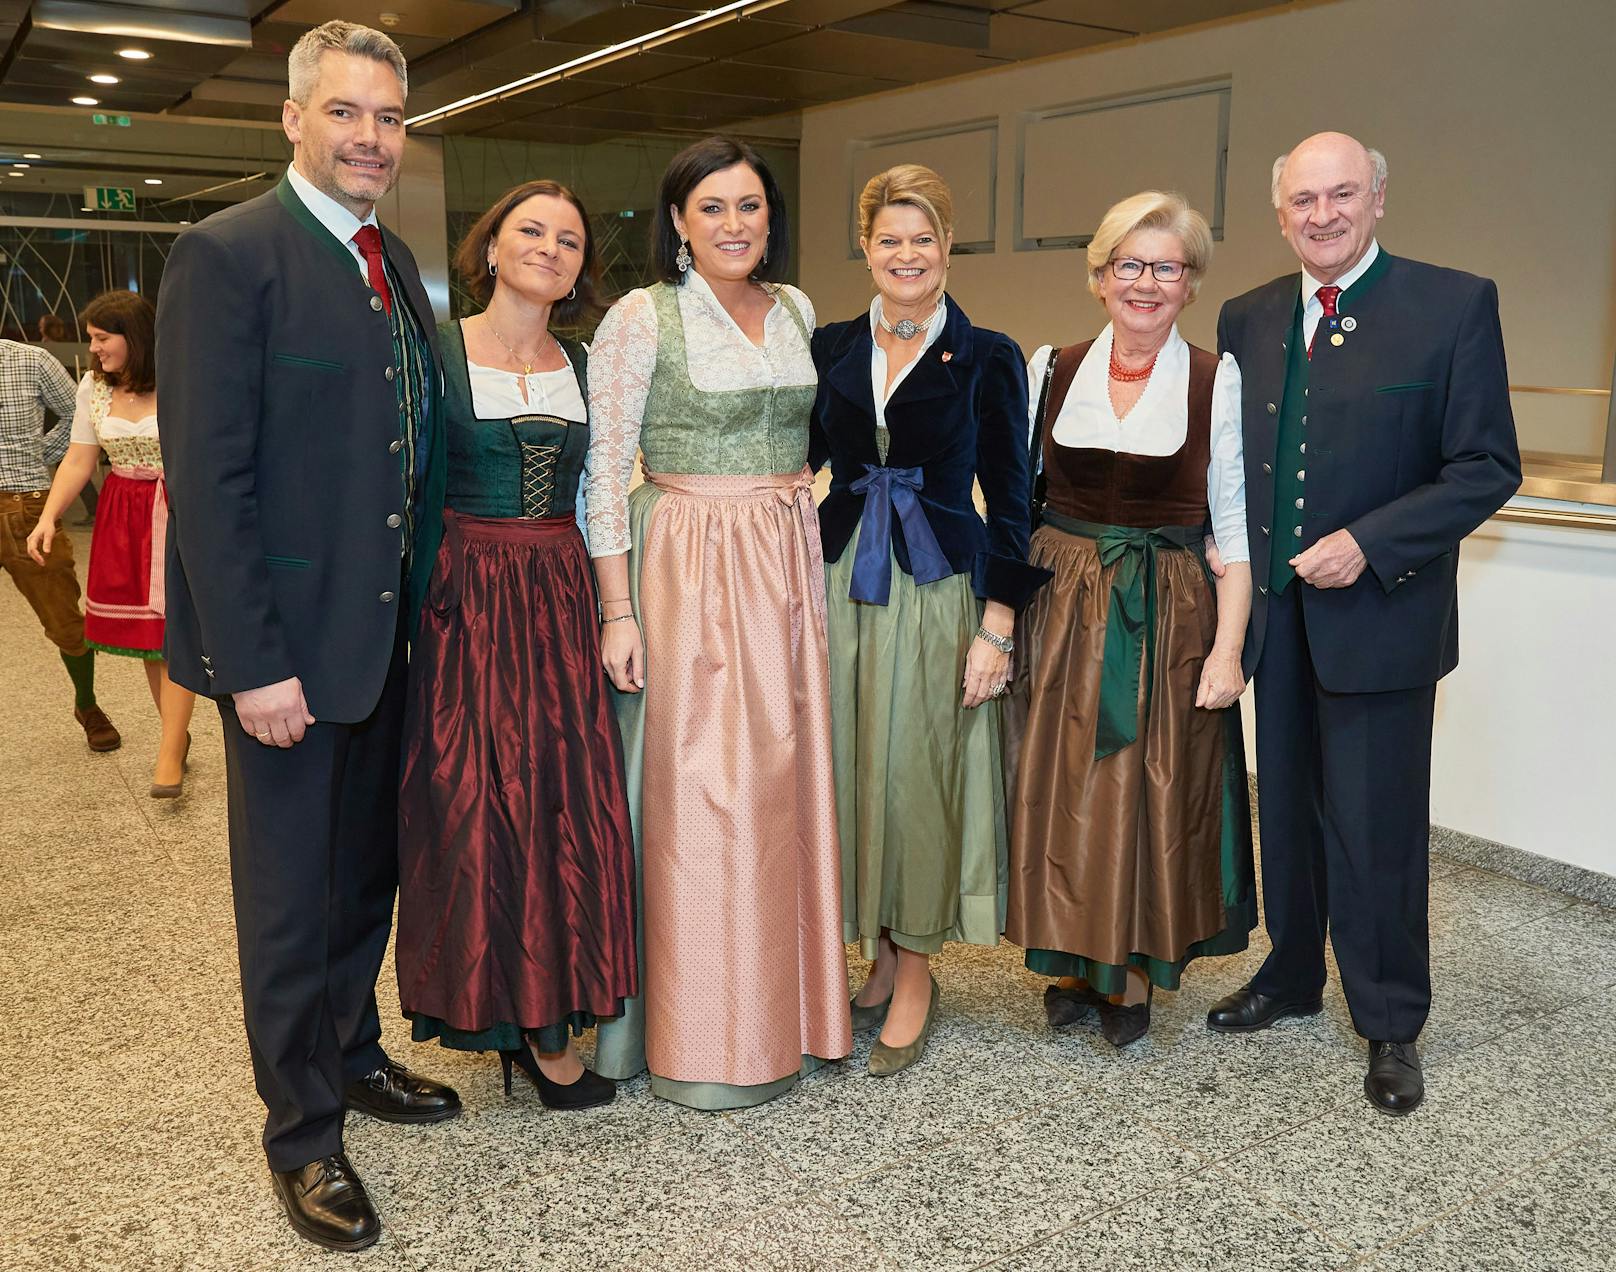 Nehammer mit seiner Frau Katharina, Elisabeth Köstinger, Klaudia Tanner, Sissy und Erwin Pröll.